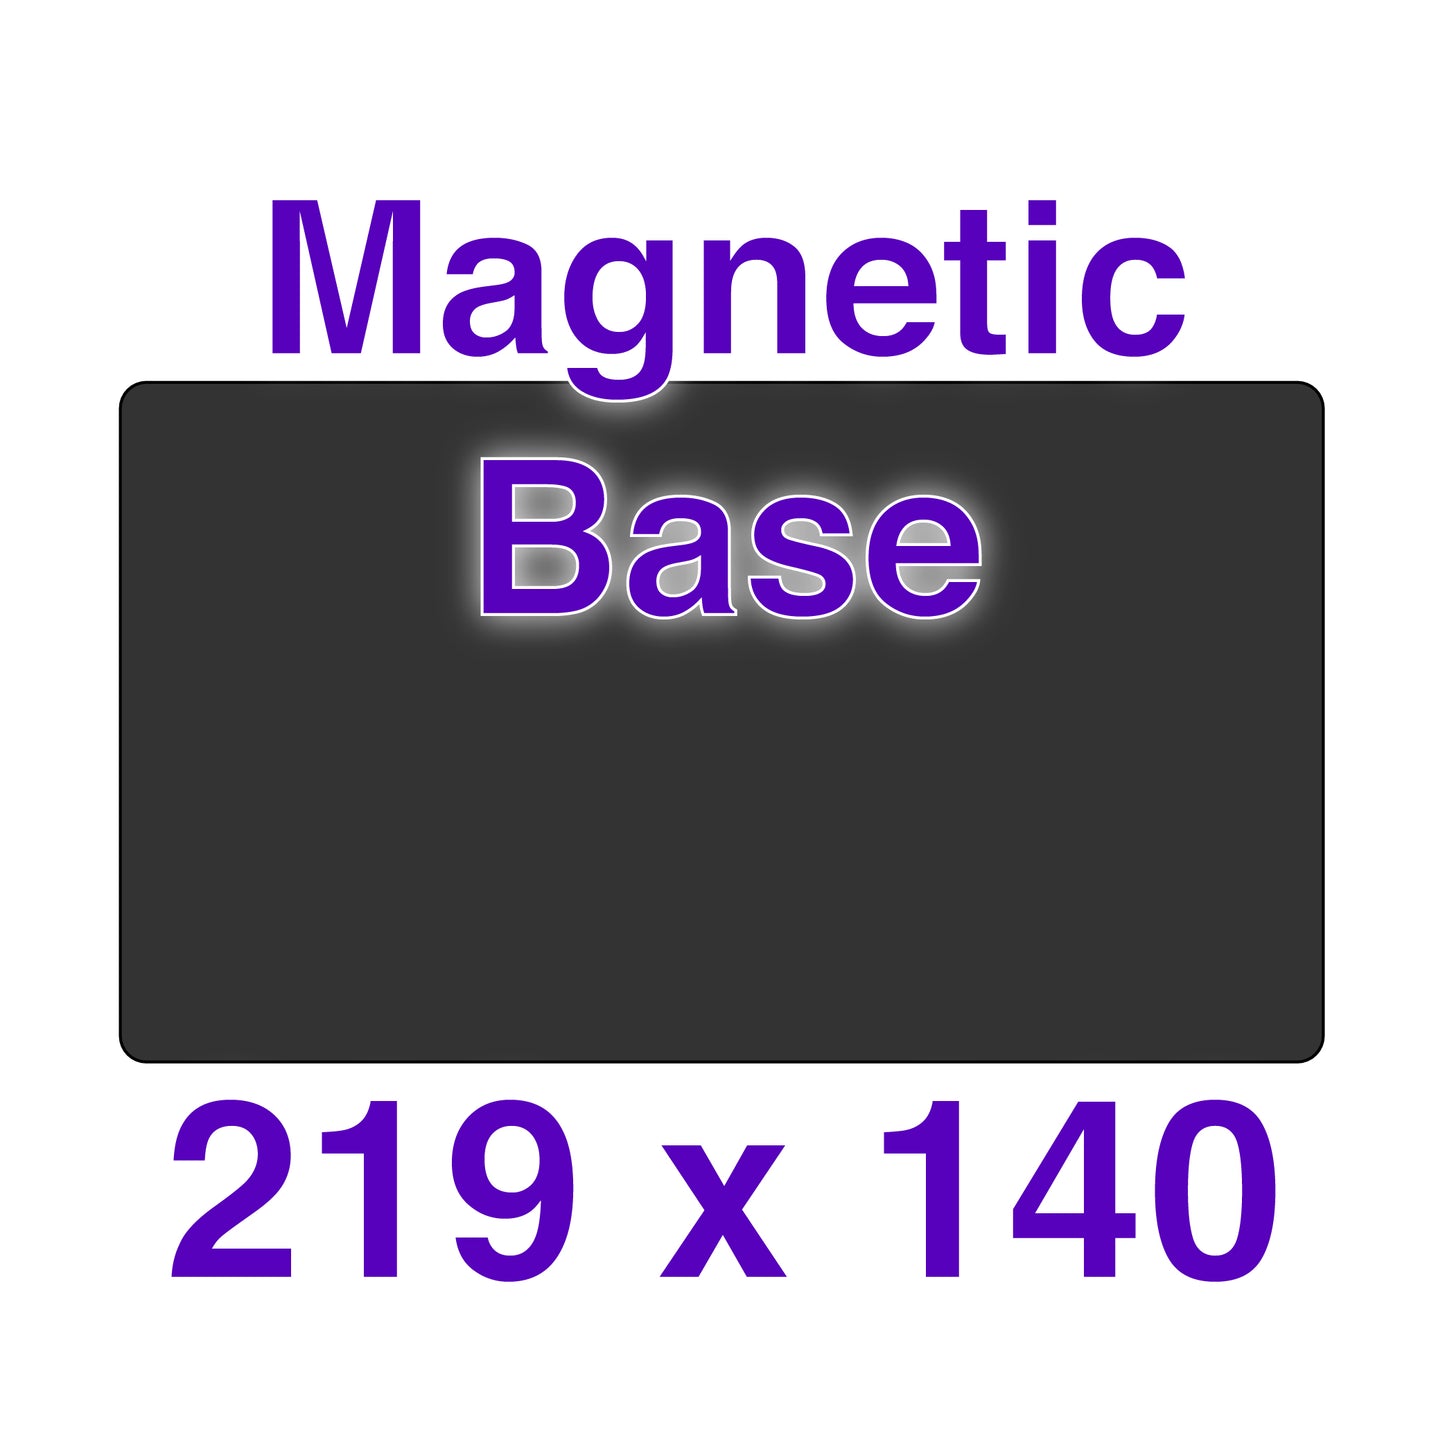 Magnetic Base - 219 x 140